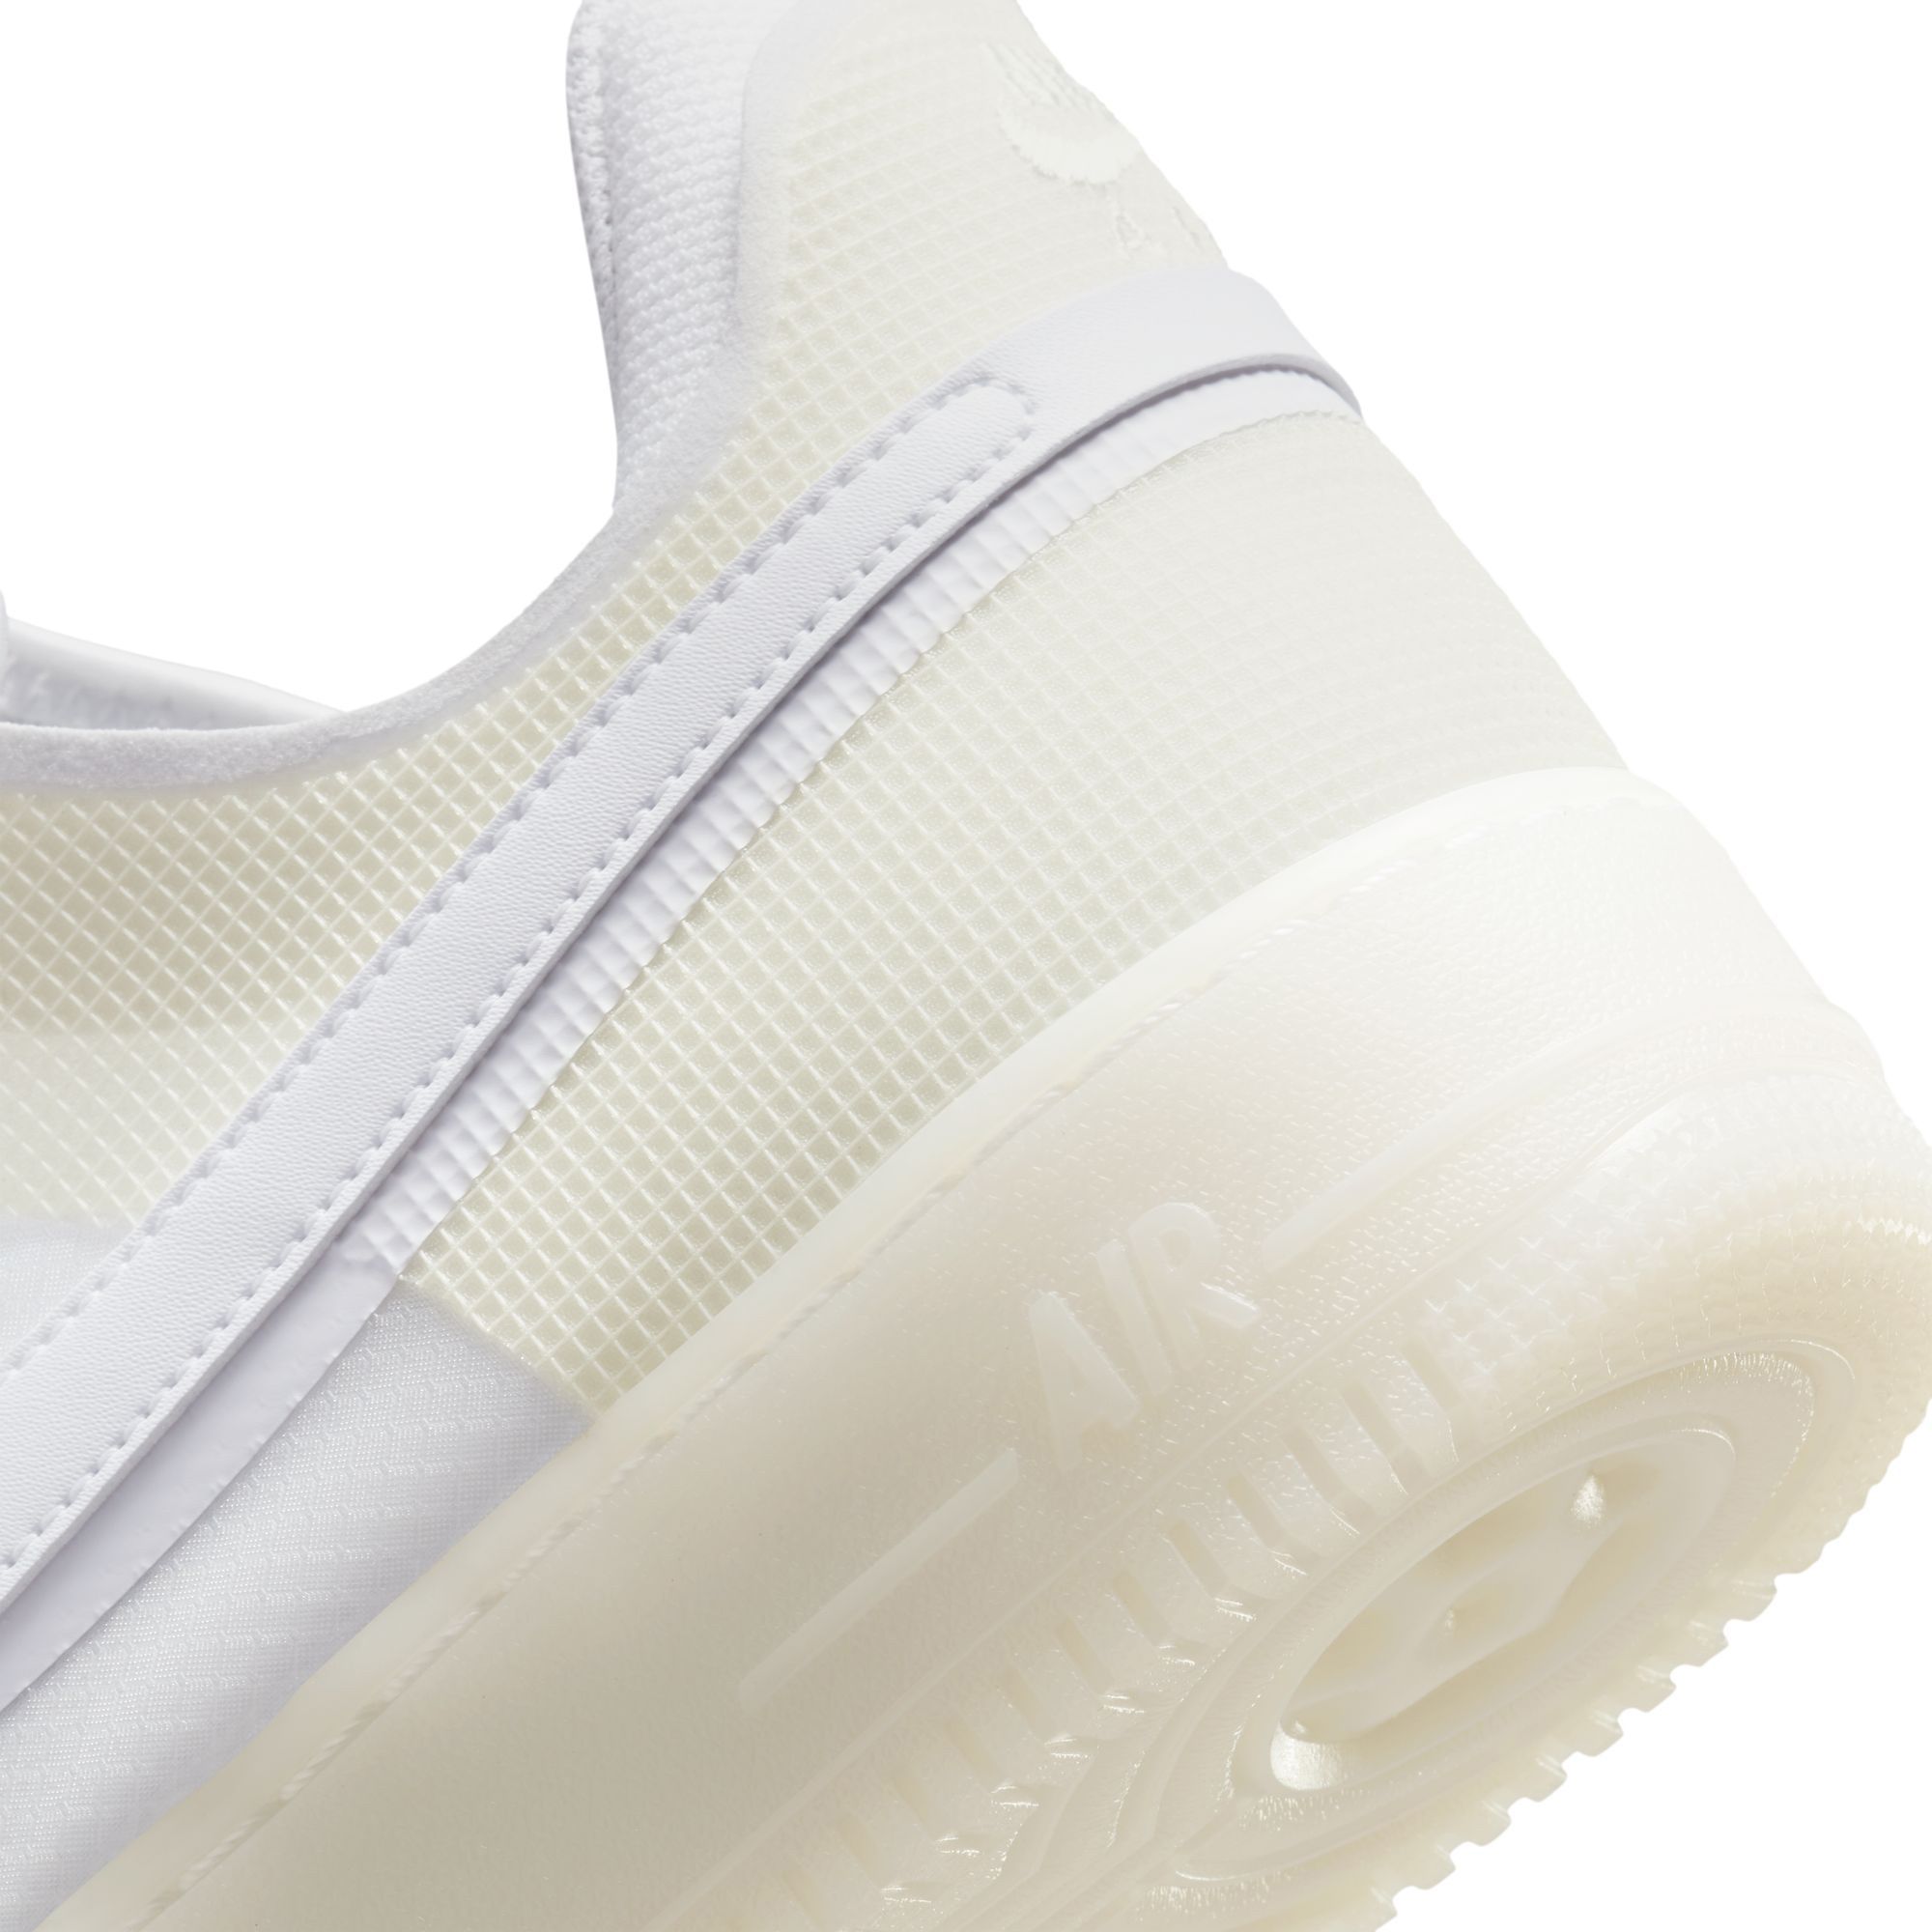 Nike Air Force 1 Low React 'Black White' Running Shoes DM0573-002 Men’s  Size 13